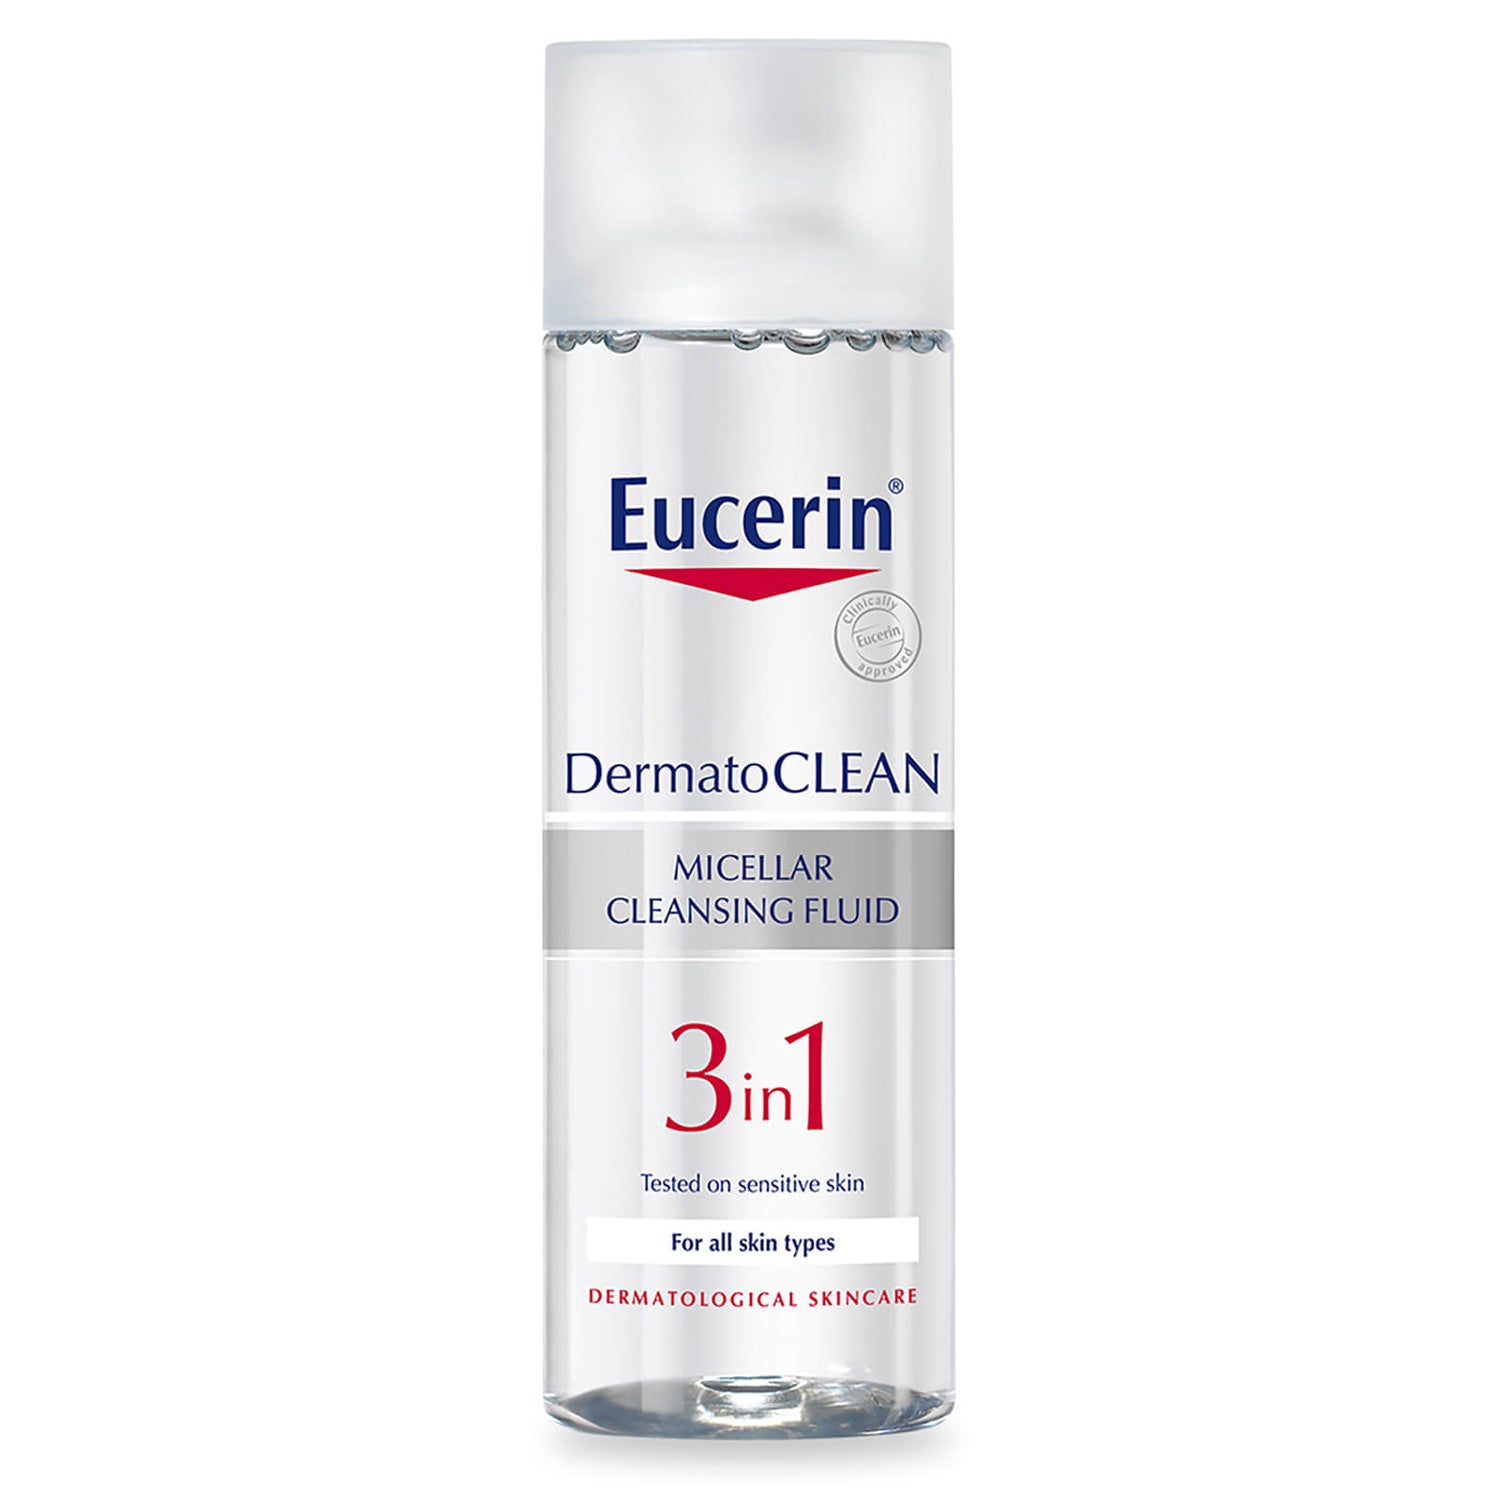 Eucerin® ダーマトクリーン 3イン1 ミセラー クレンジング フルイド (200ml)